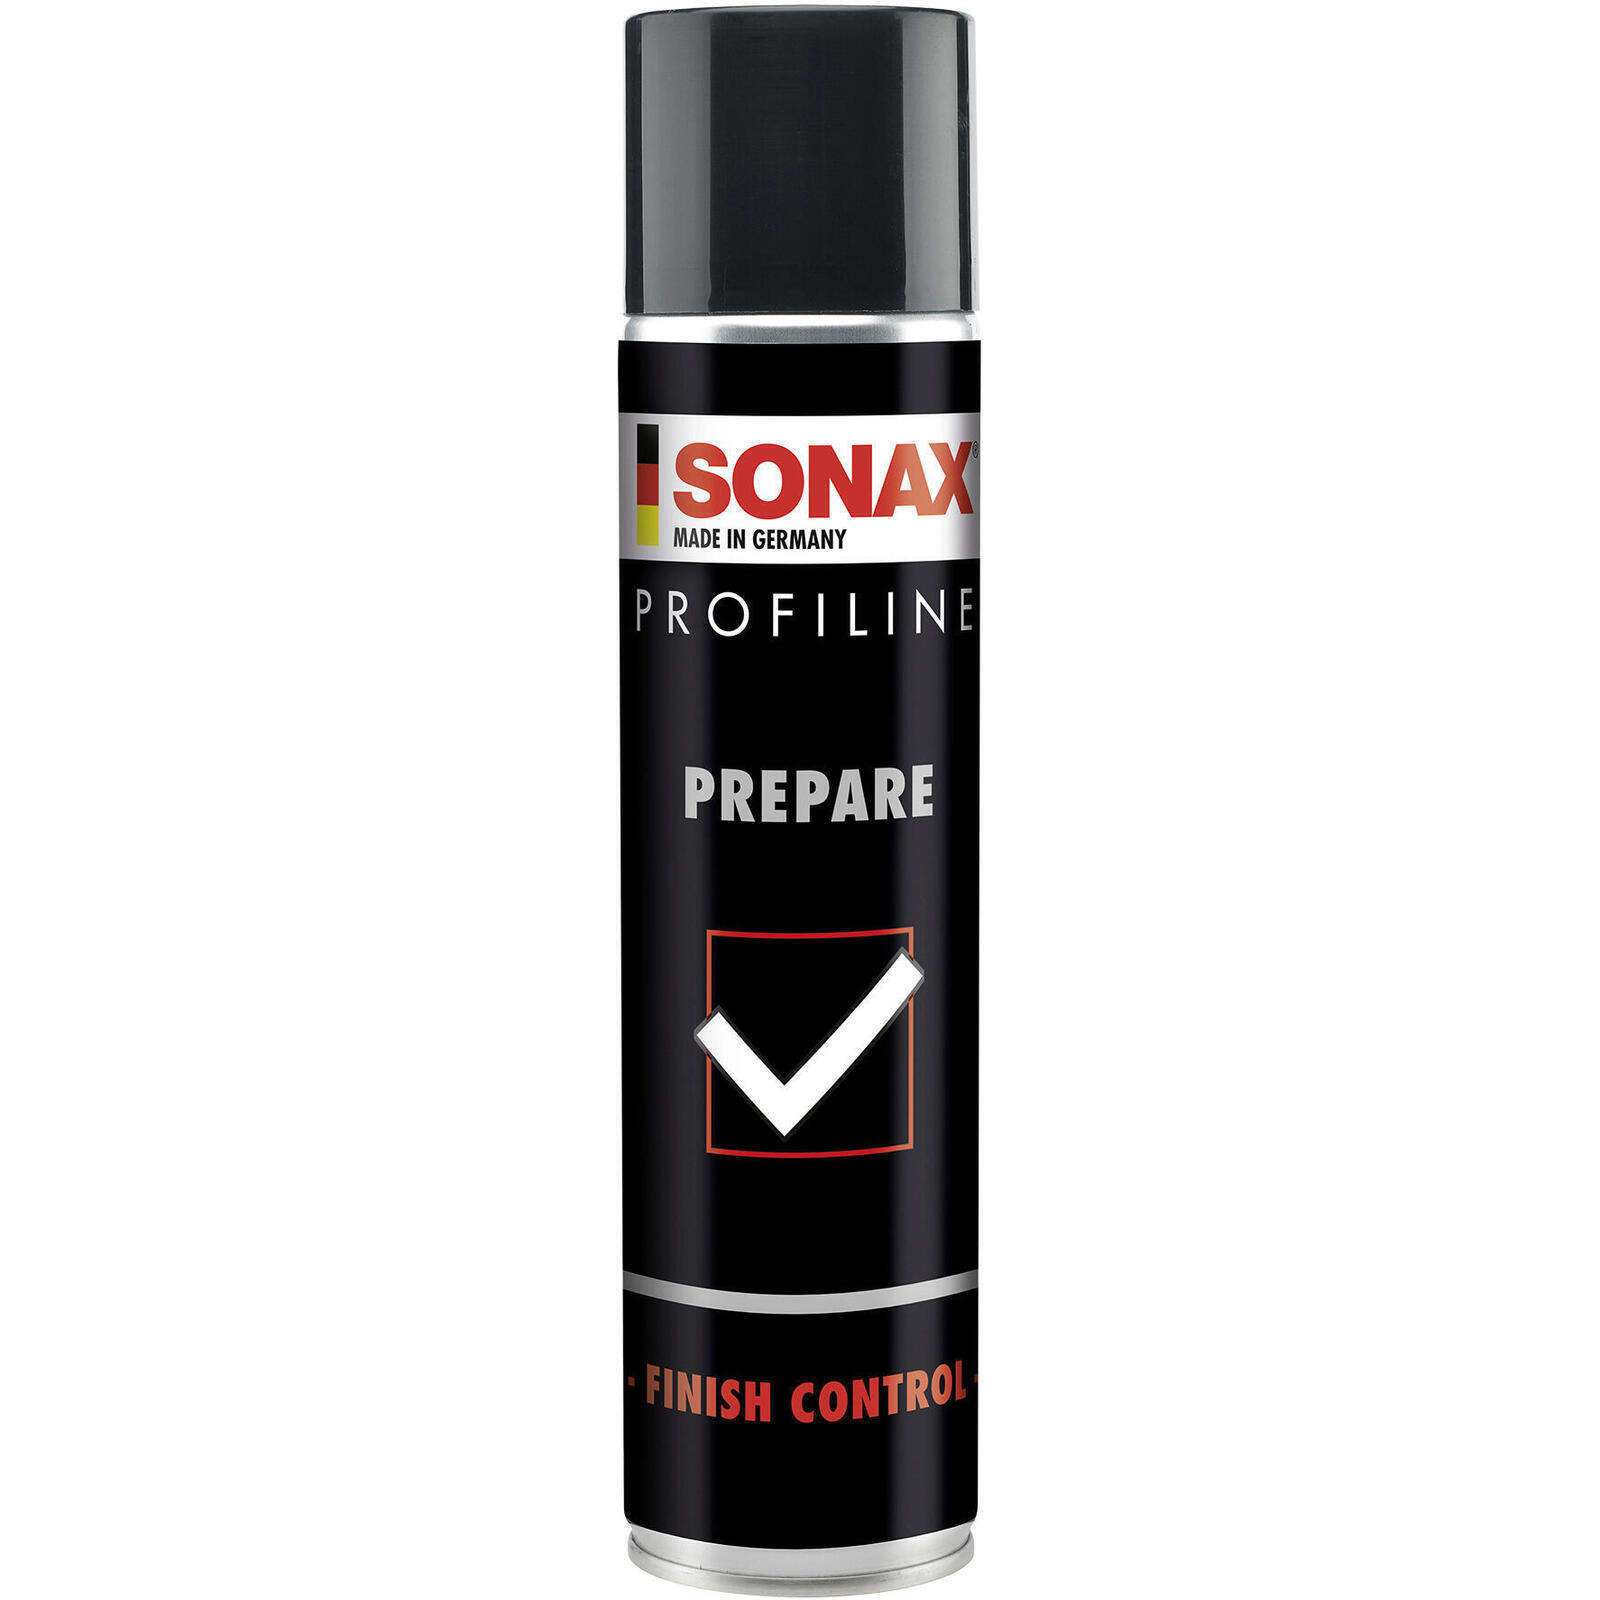 SONAX Paint Cleaner PROFILINE Paint prepare (Finish Control)